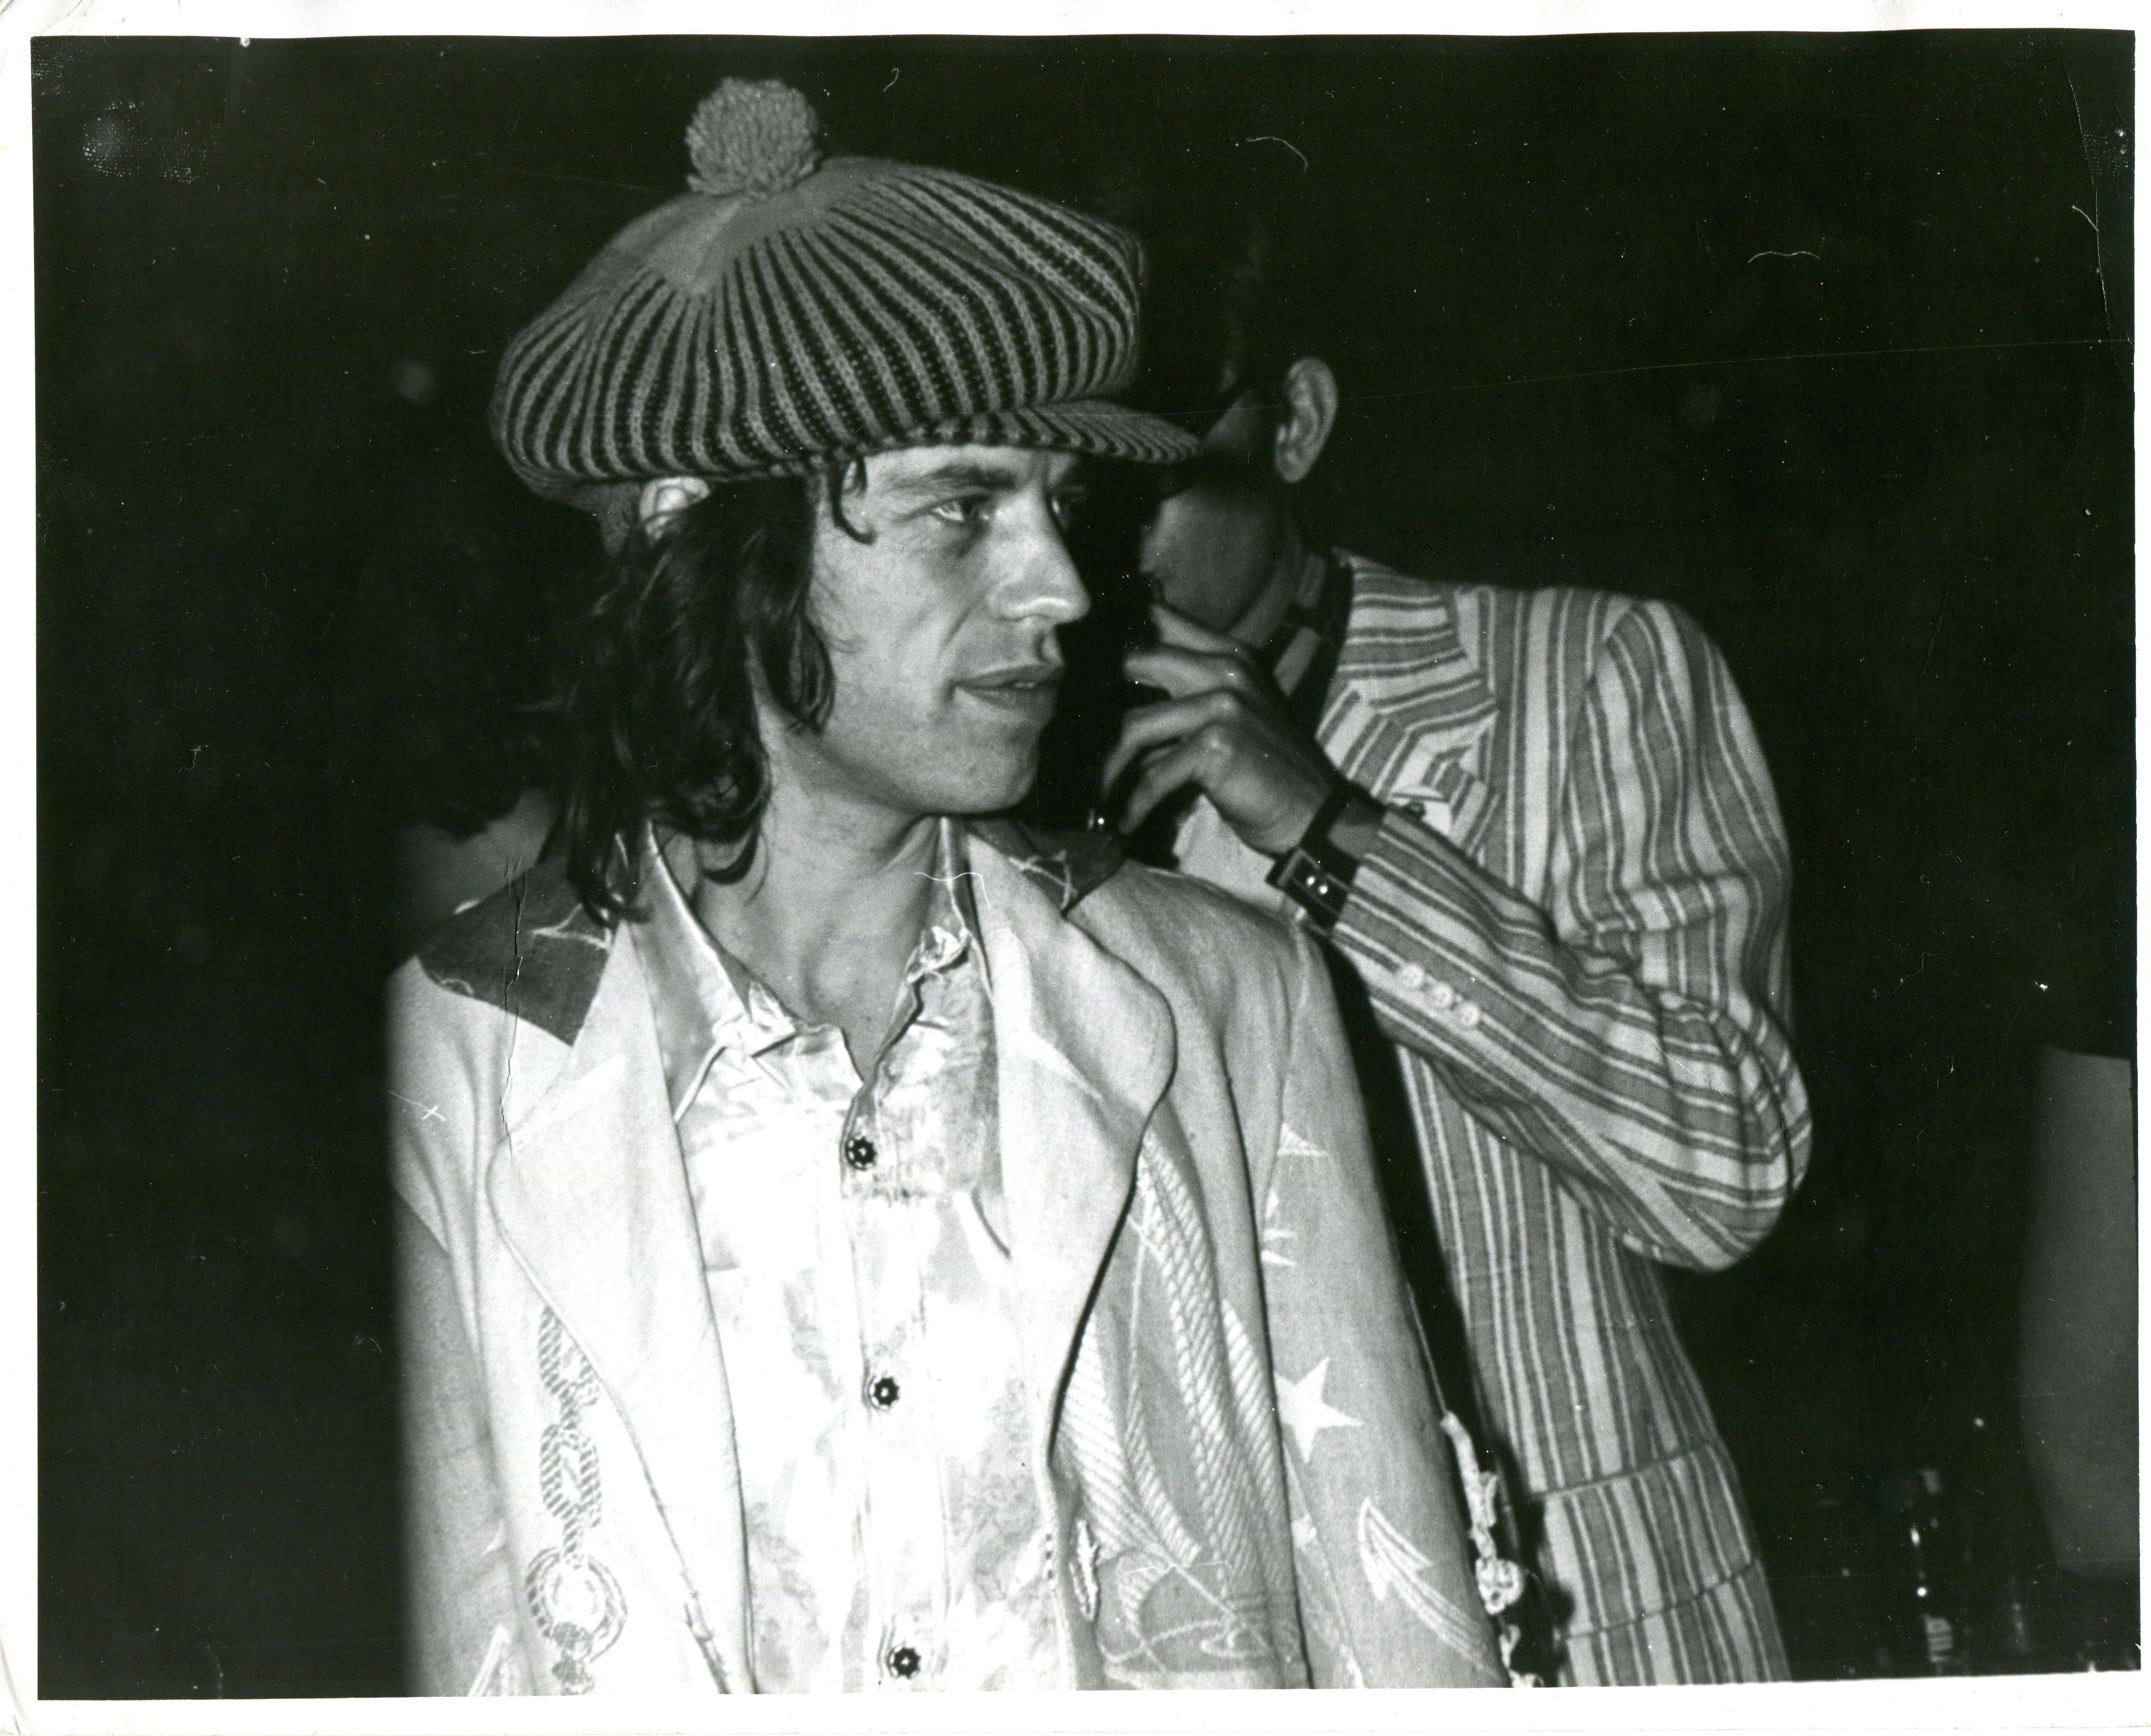 Tony Trezza Portrait Photograph - Rolling Stones - Mick Jagger